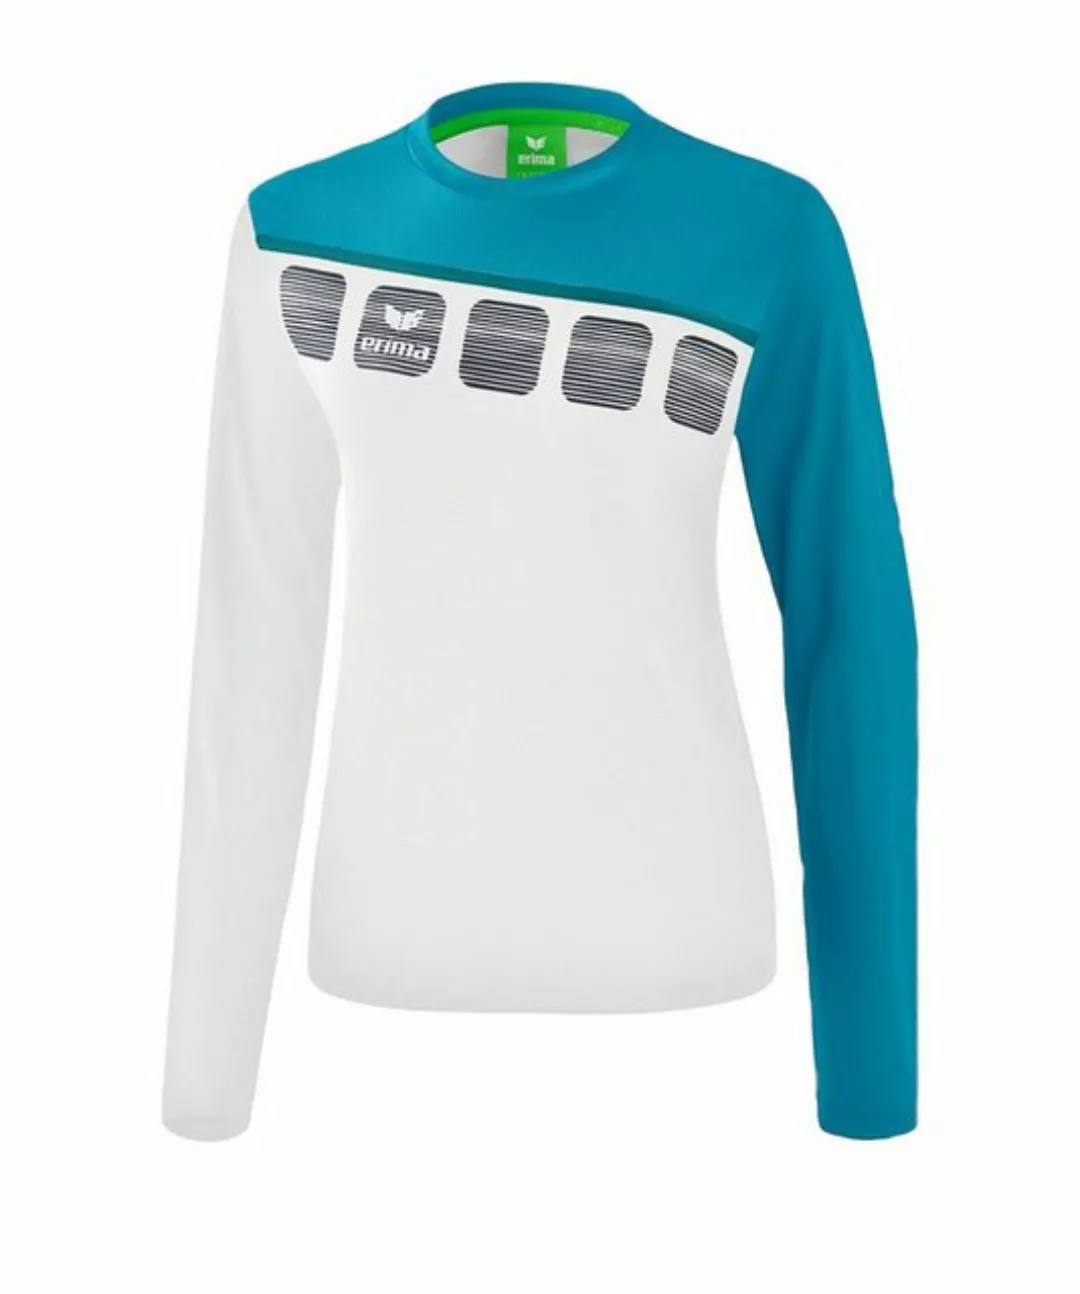 Erima Sweater 5-C Longsleeve Damen günstig online kaufen